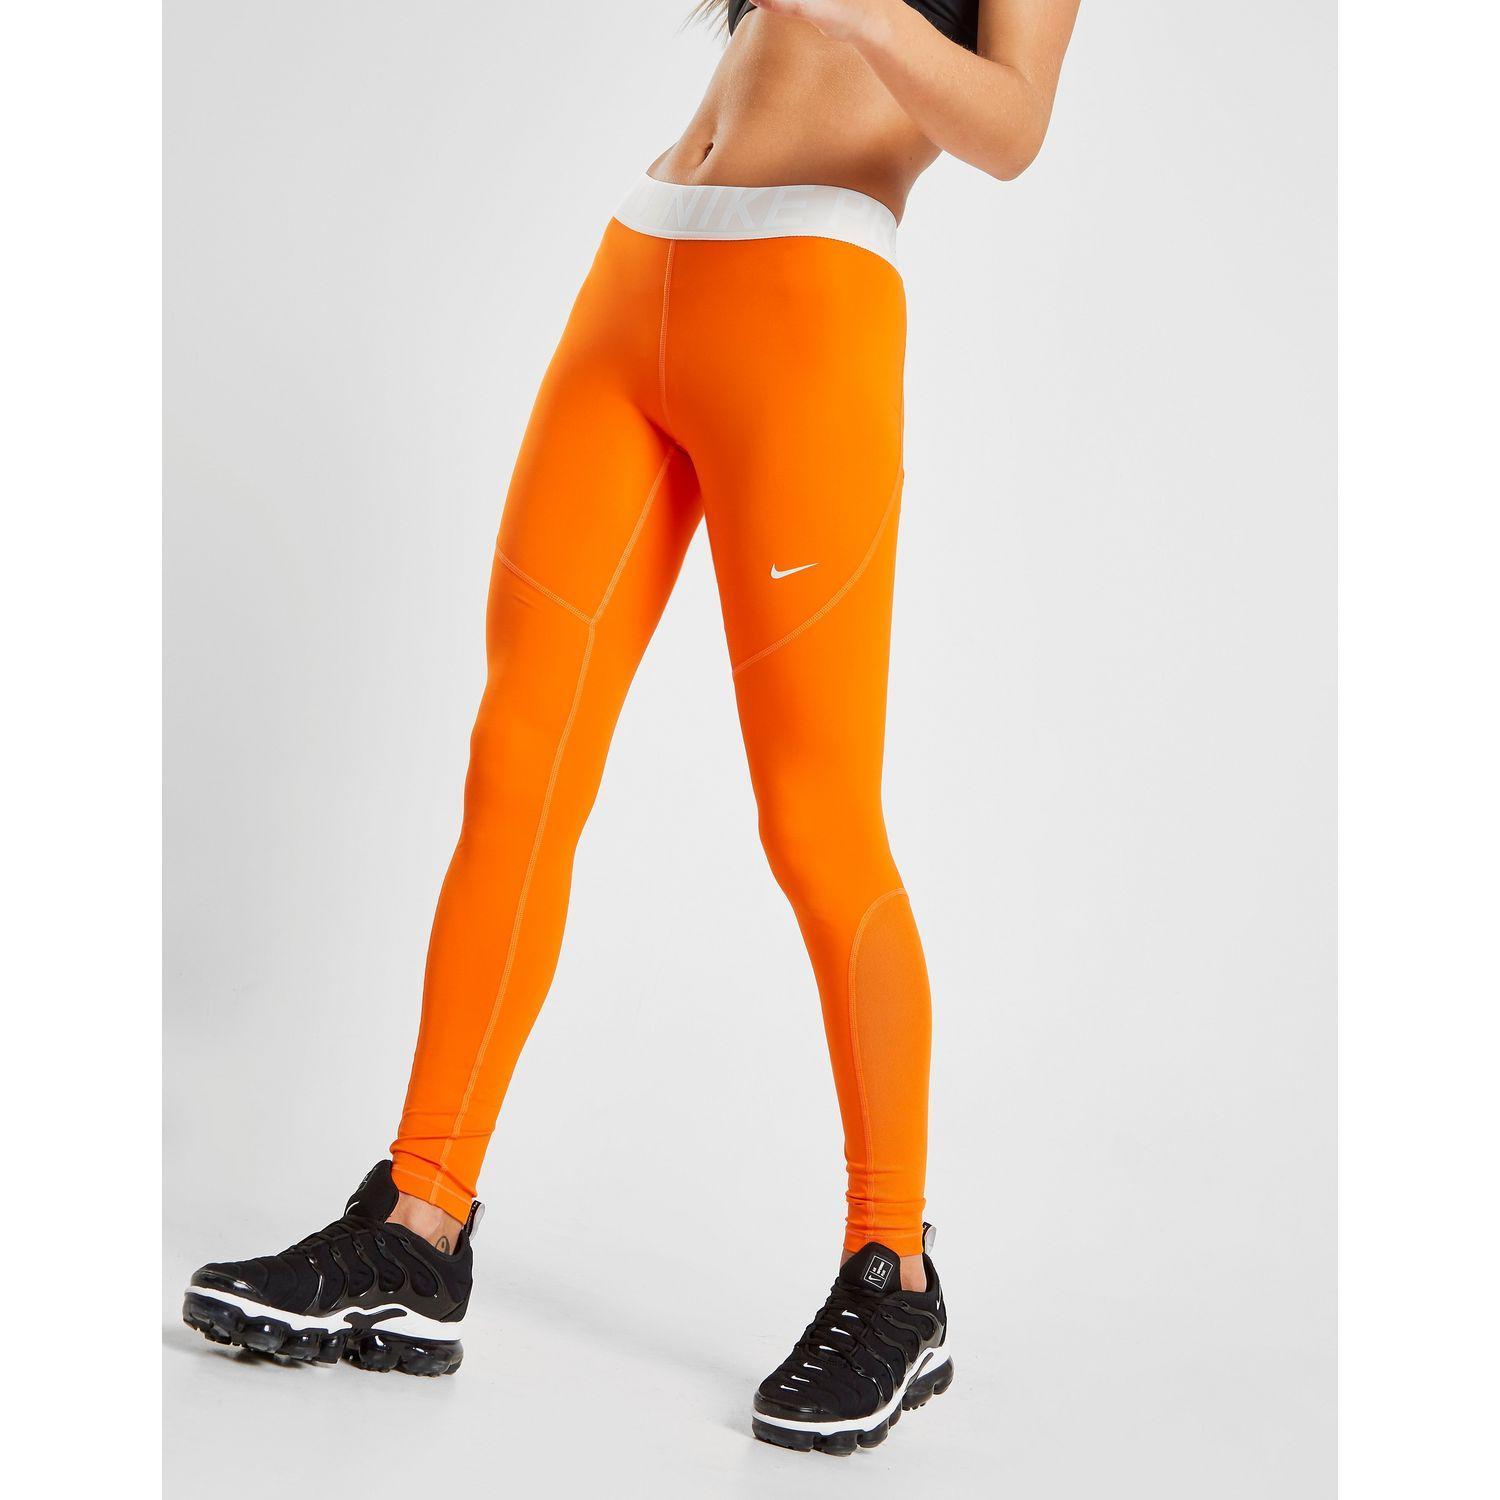 nike burnt orange leggings